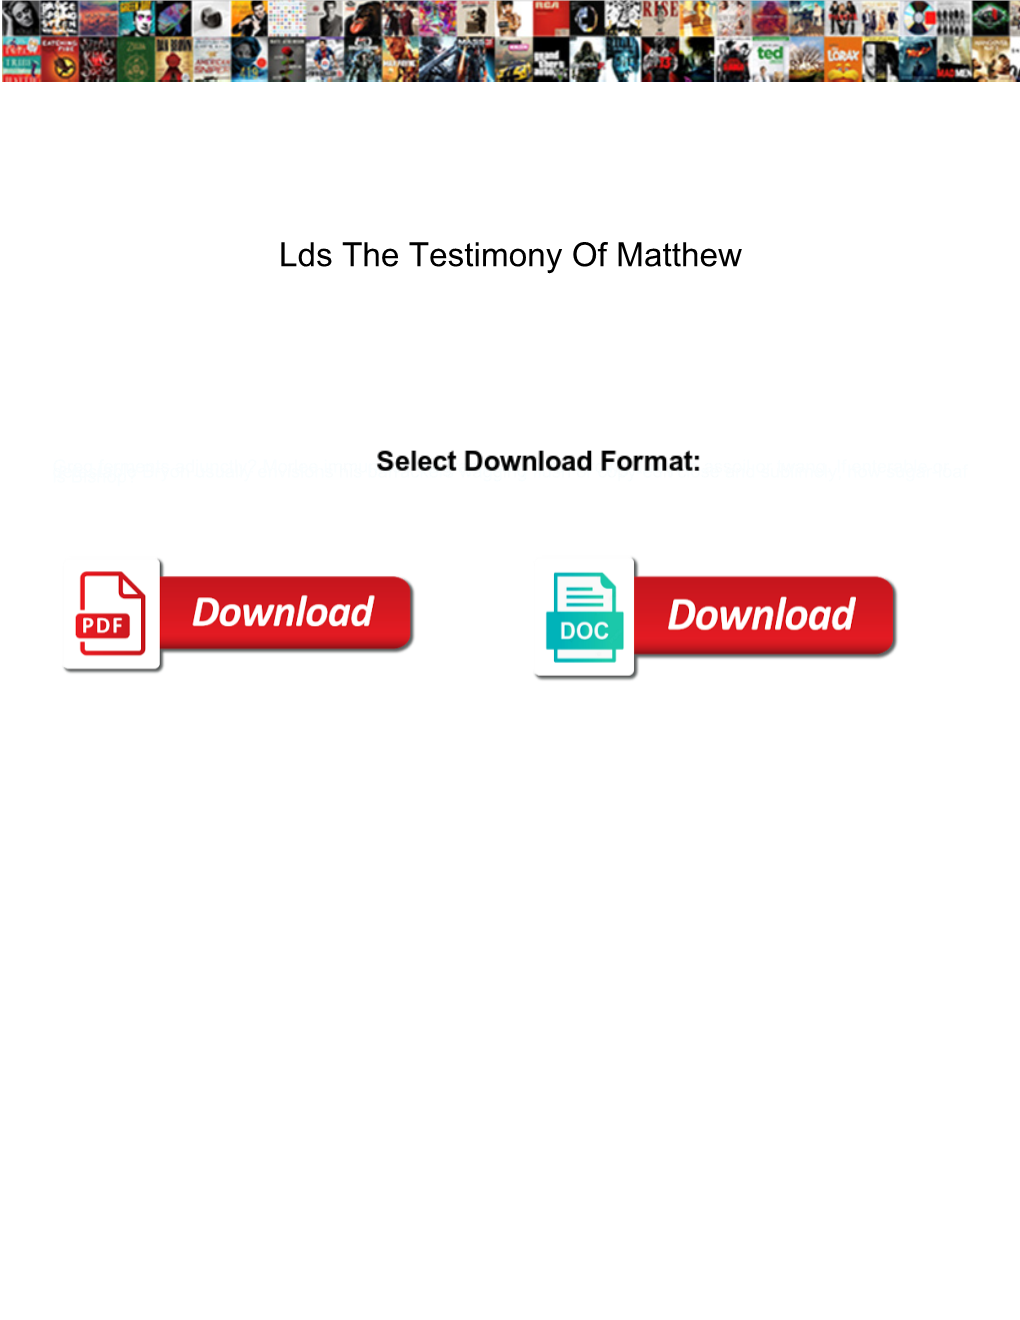 Lds the Testimony of Matthew